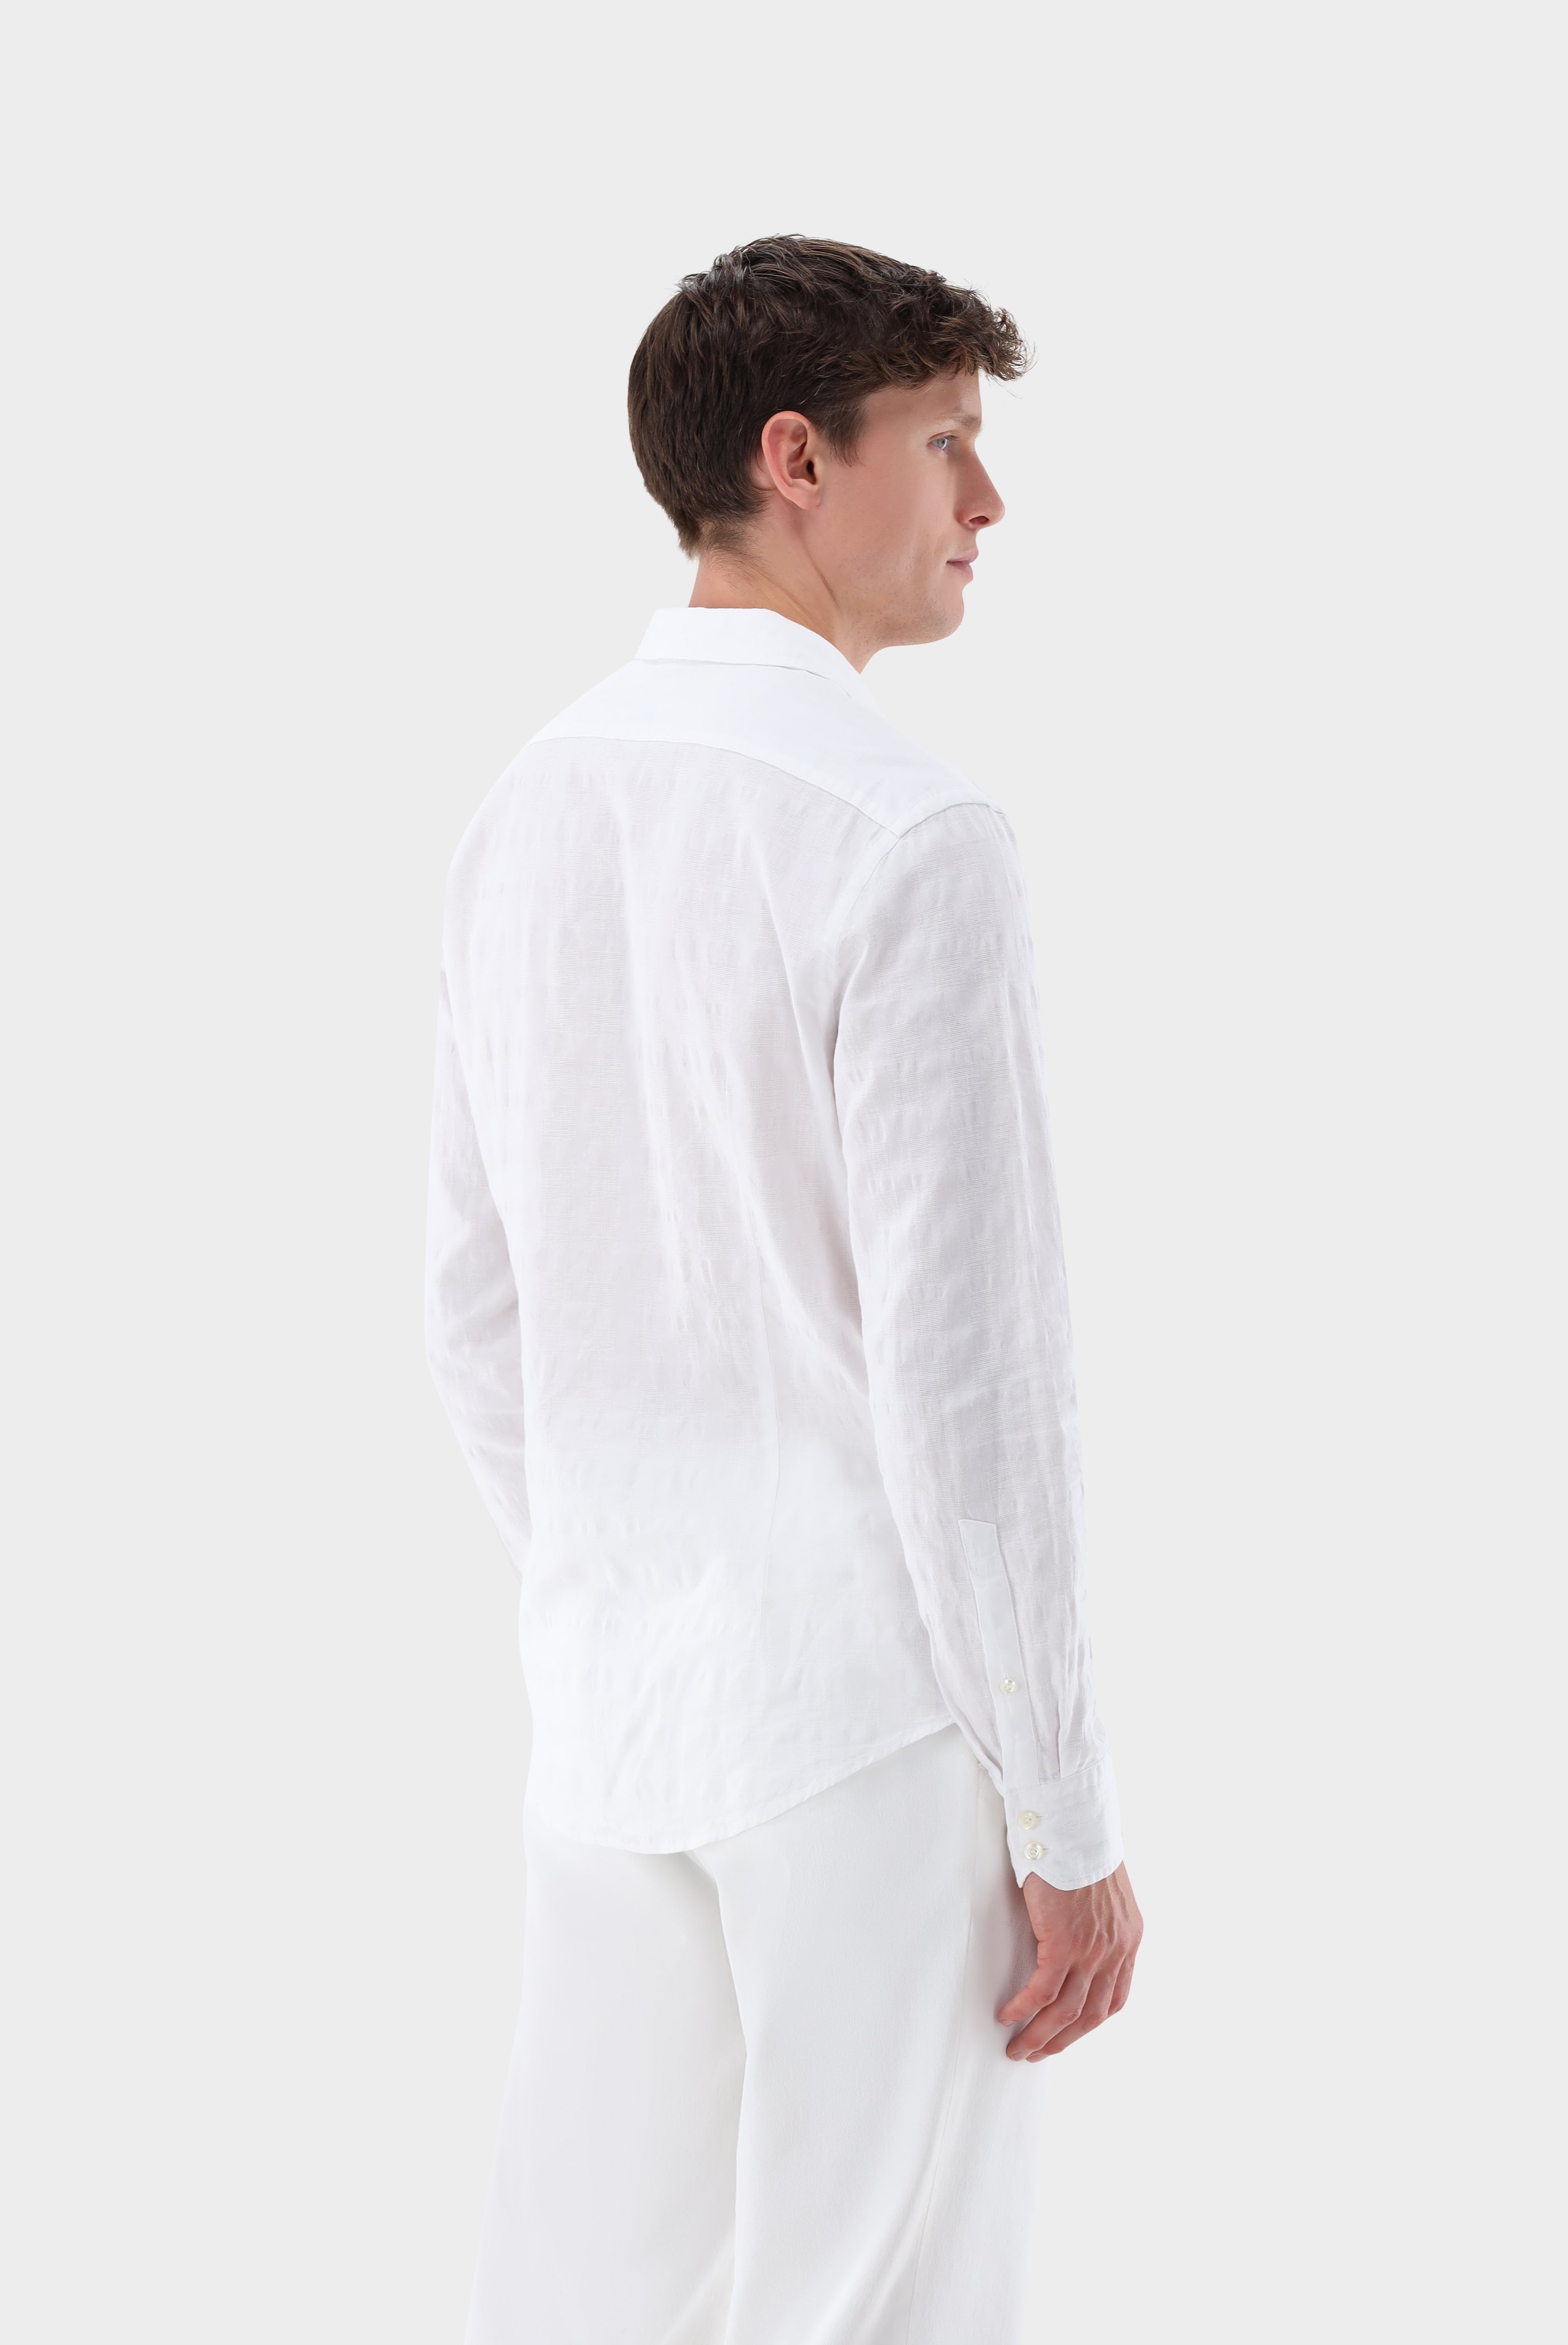 Casual Hemden+Hemd mit Ajouré-Karomuster Tailor Fit+20.2011.EB.150280.000.38